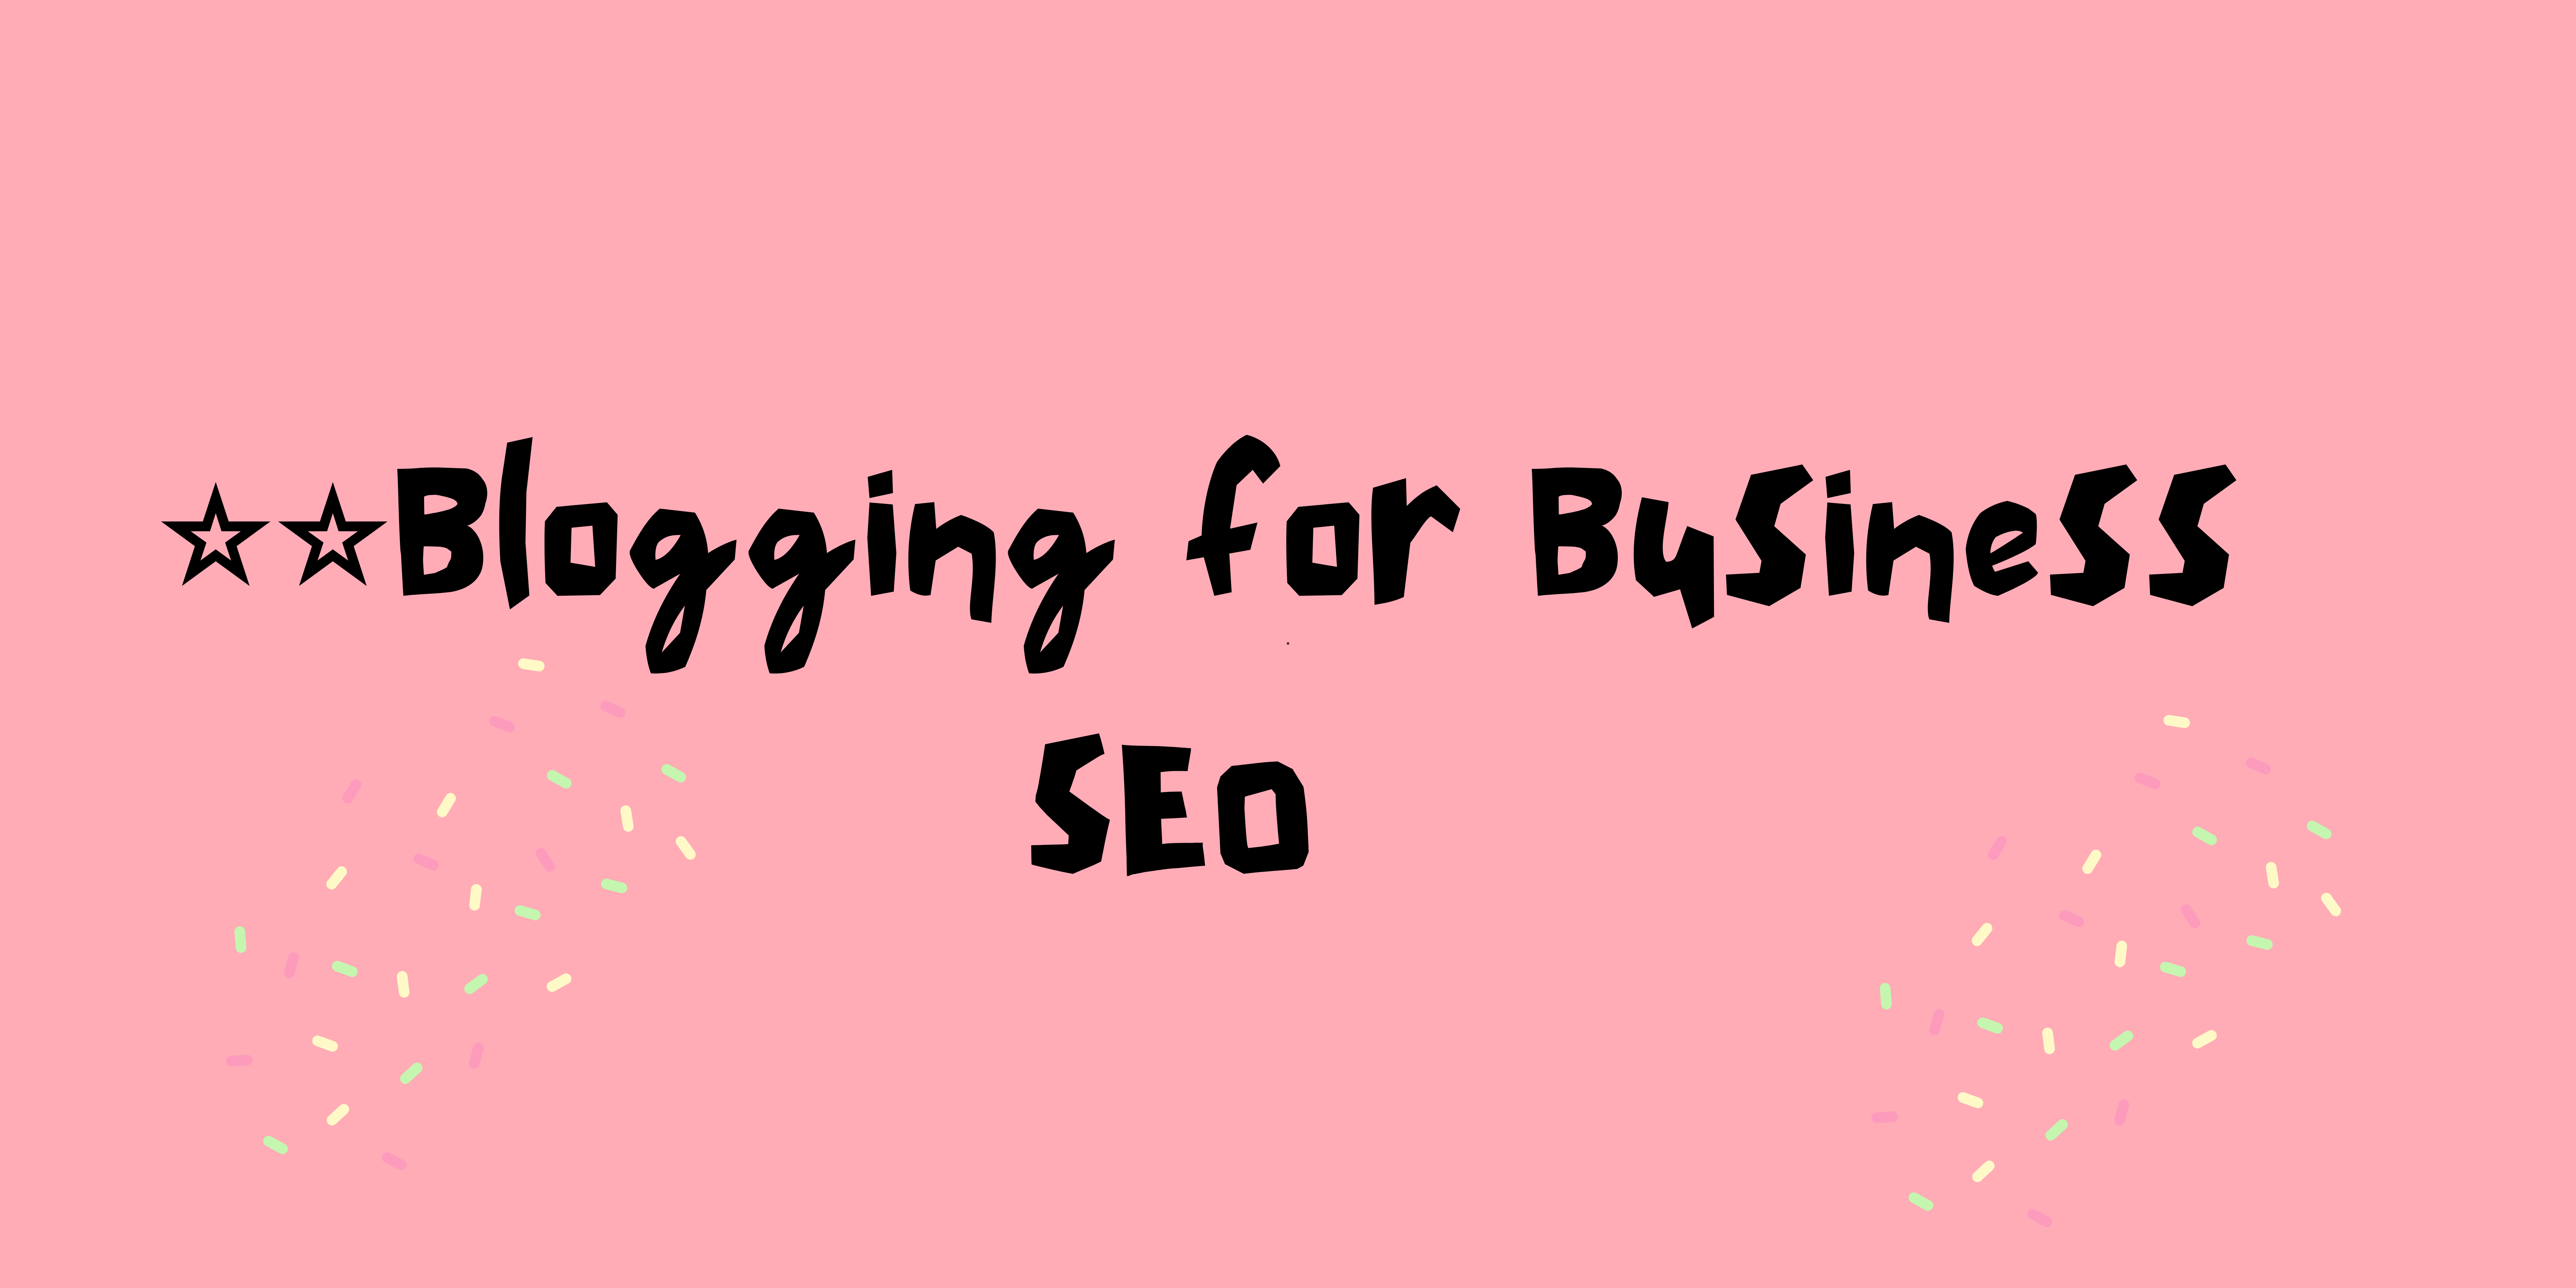 Image blogging for business SEO